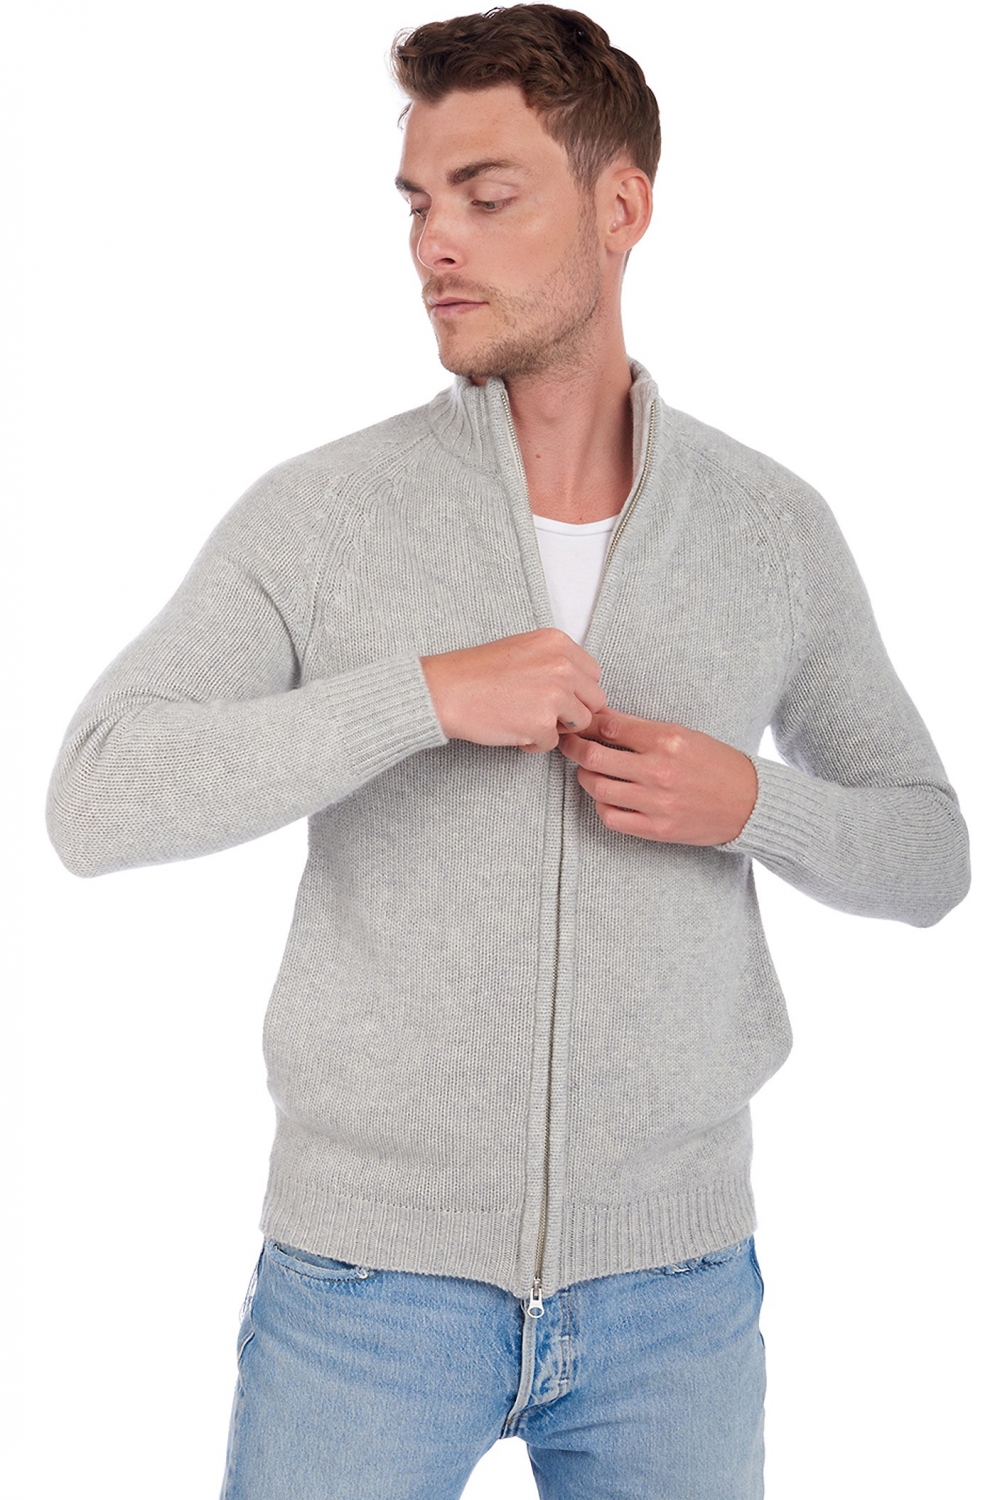 Cashmere men waistcoat sleeveless sweaters argos flanelle chine s